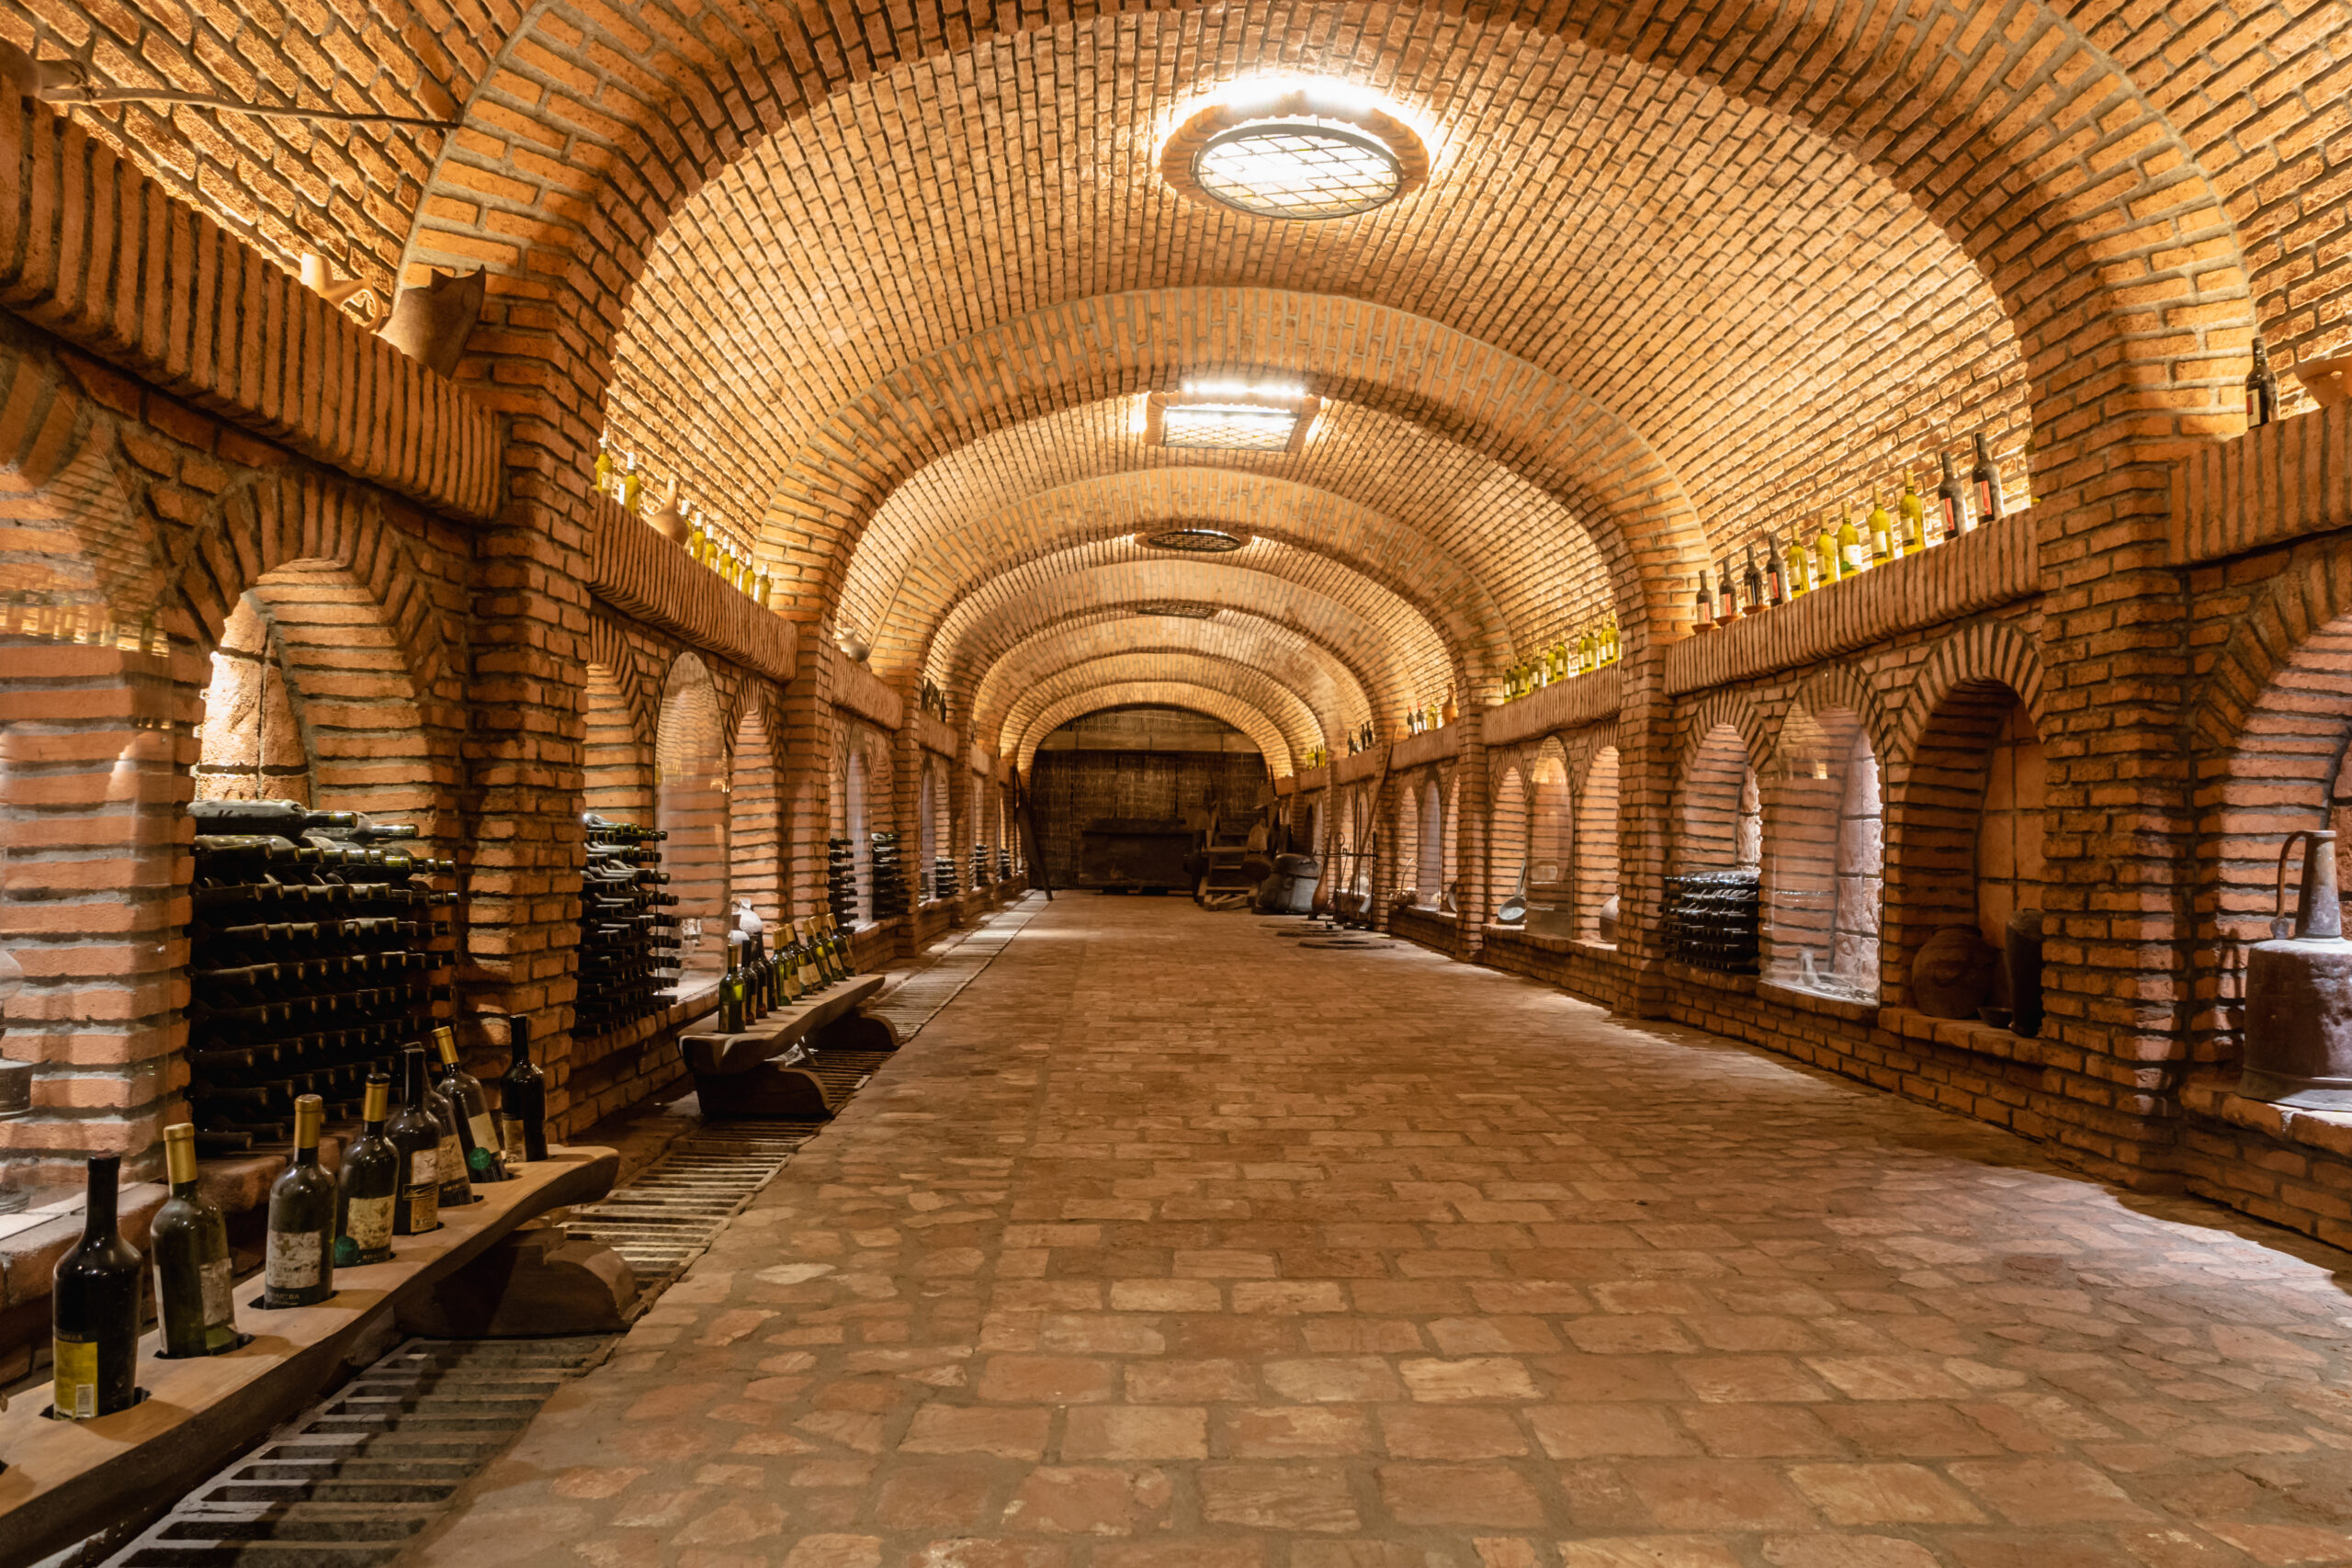 production-services-and-filming-in-georgia-via-swixer-underground-wine-cellar